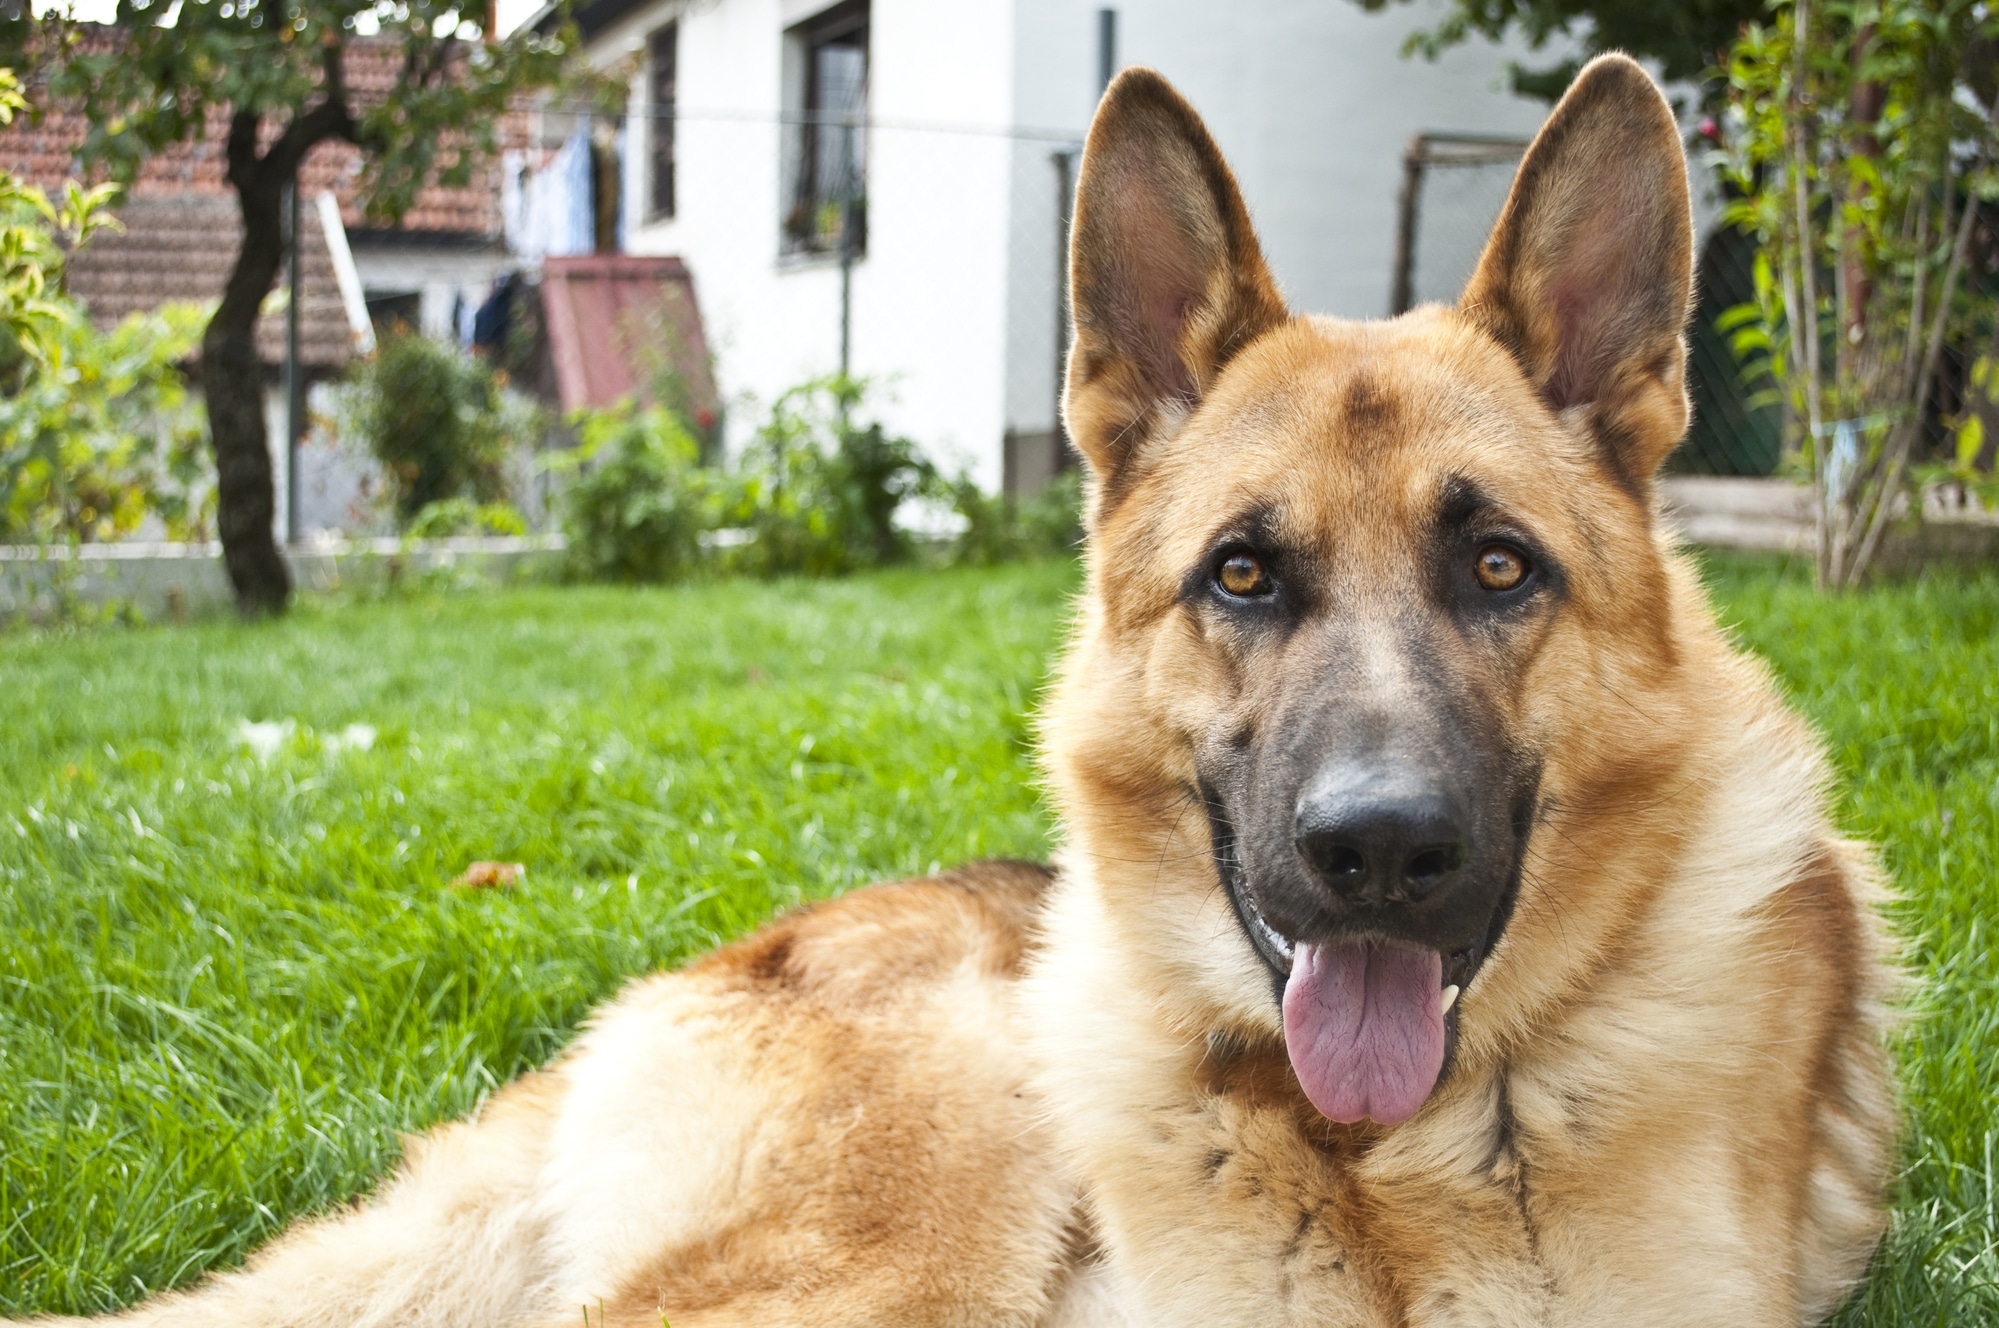 German Shepherd dog, a good choice for security dog